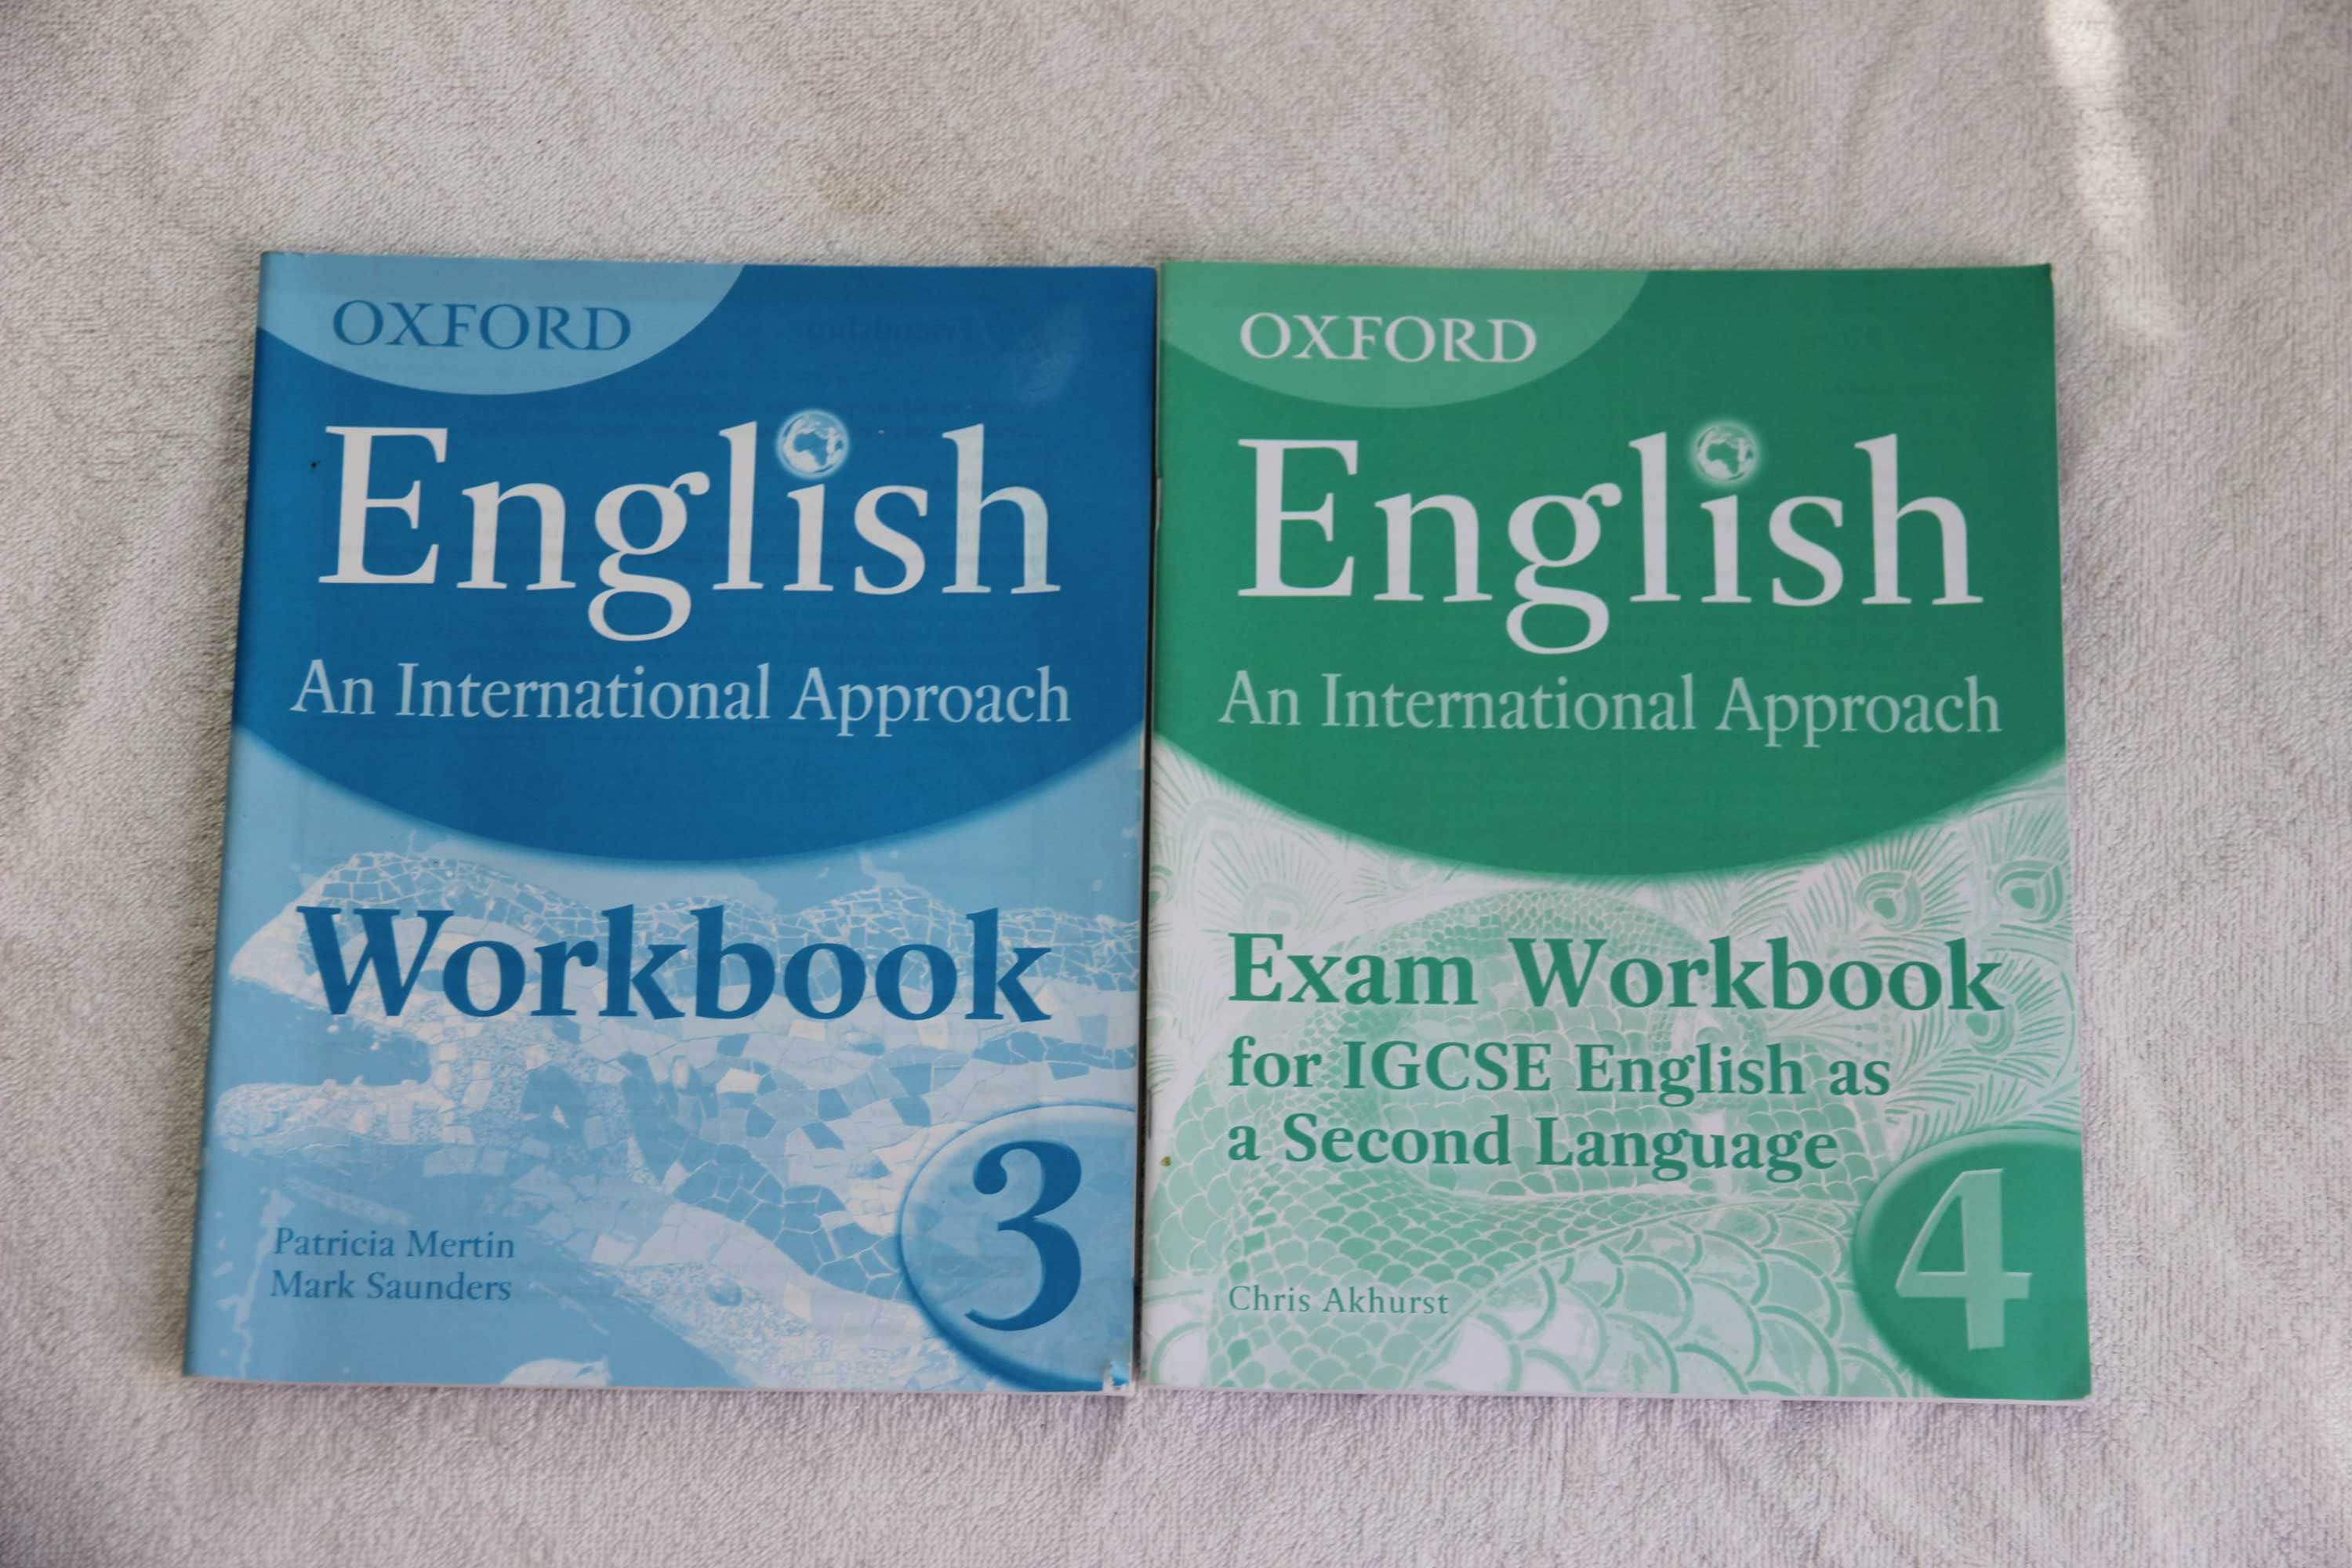 Oxford English: An International Approach: Workbook 3